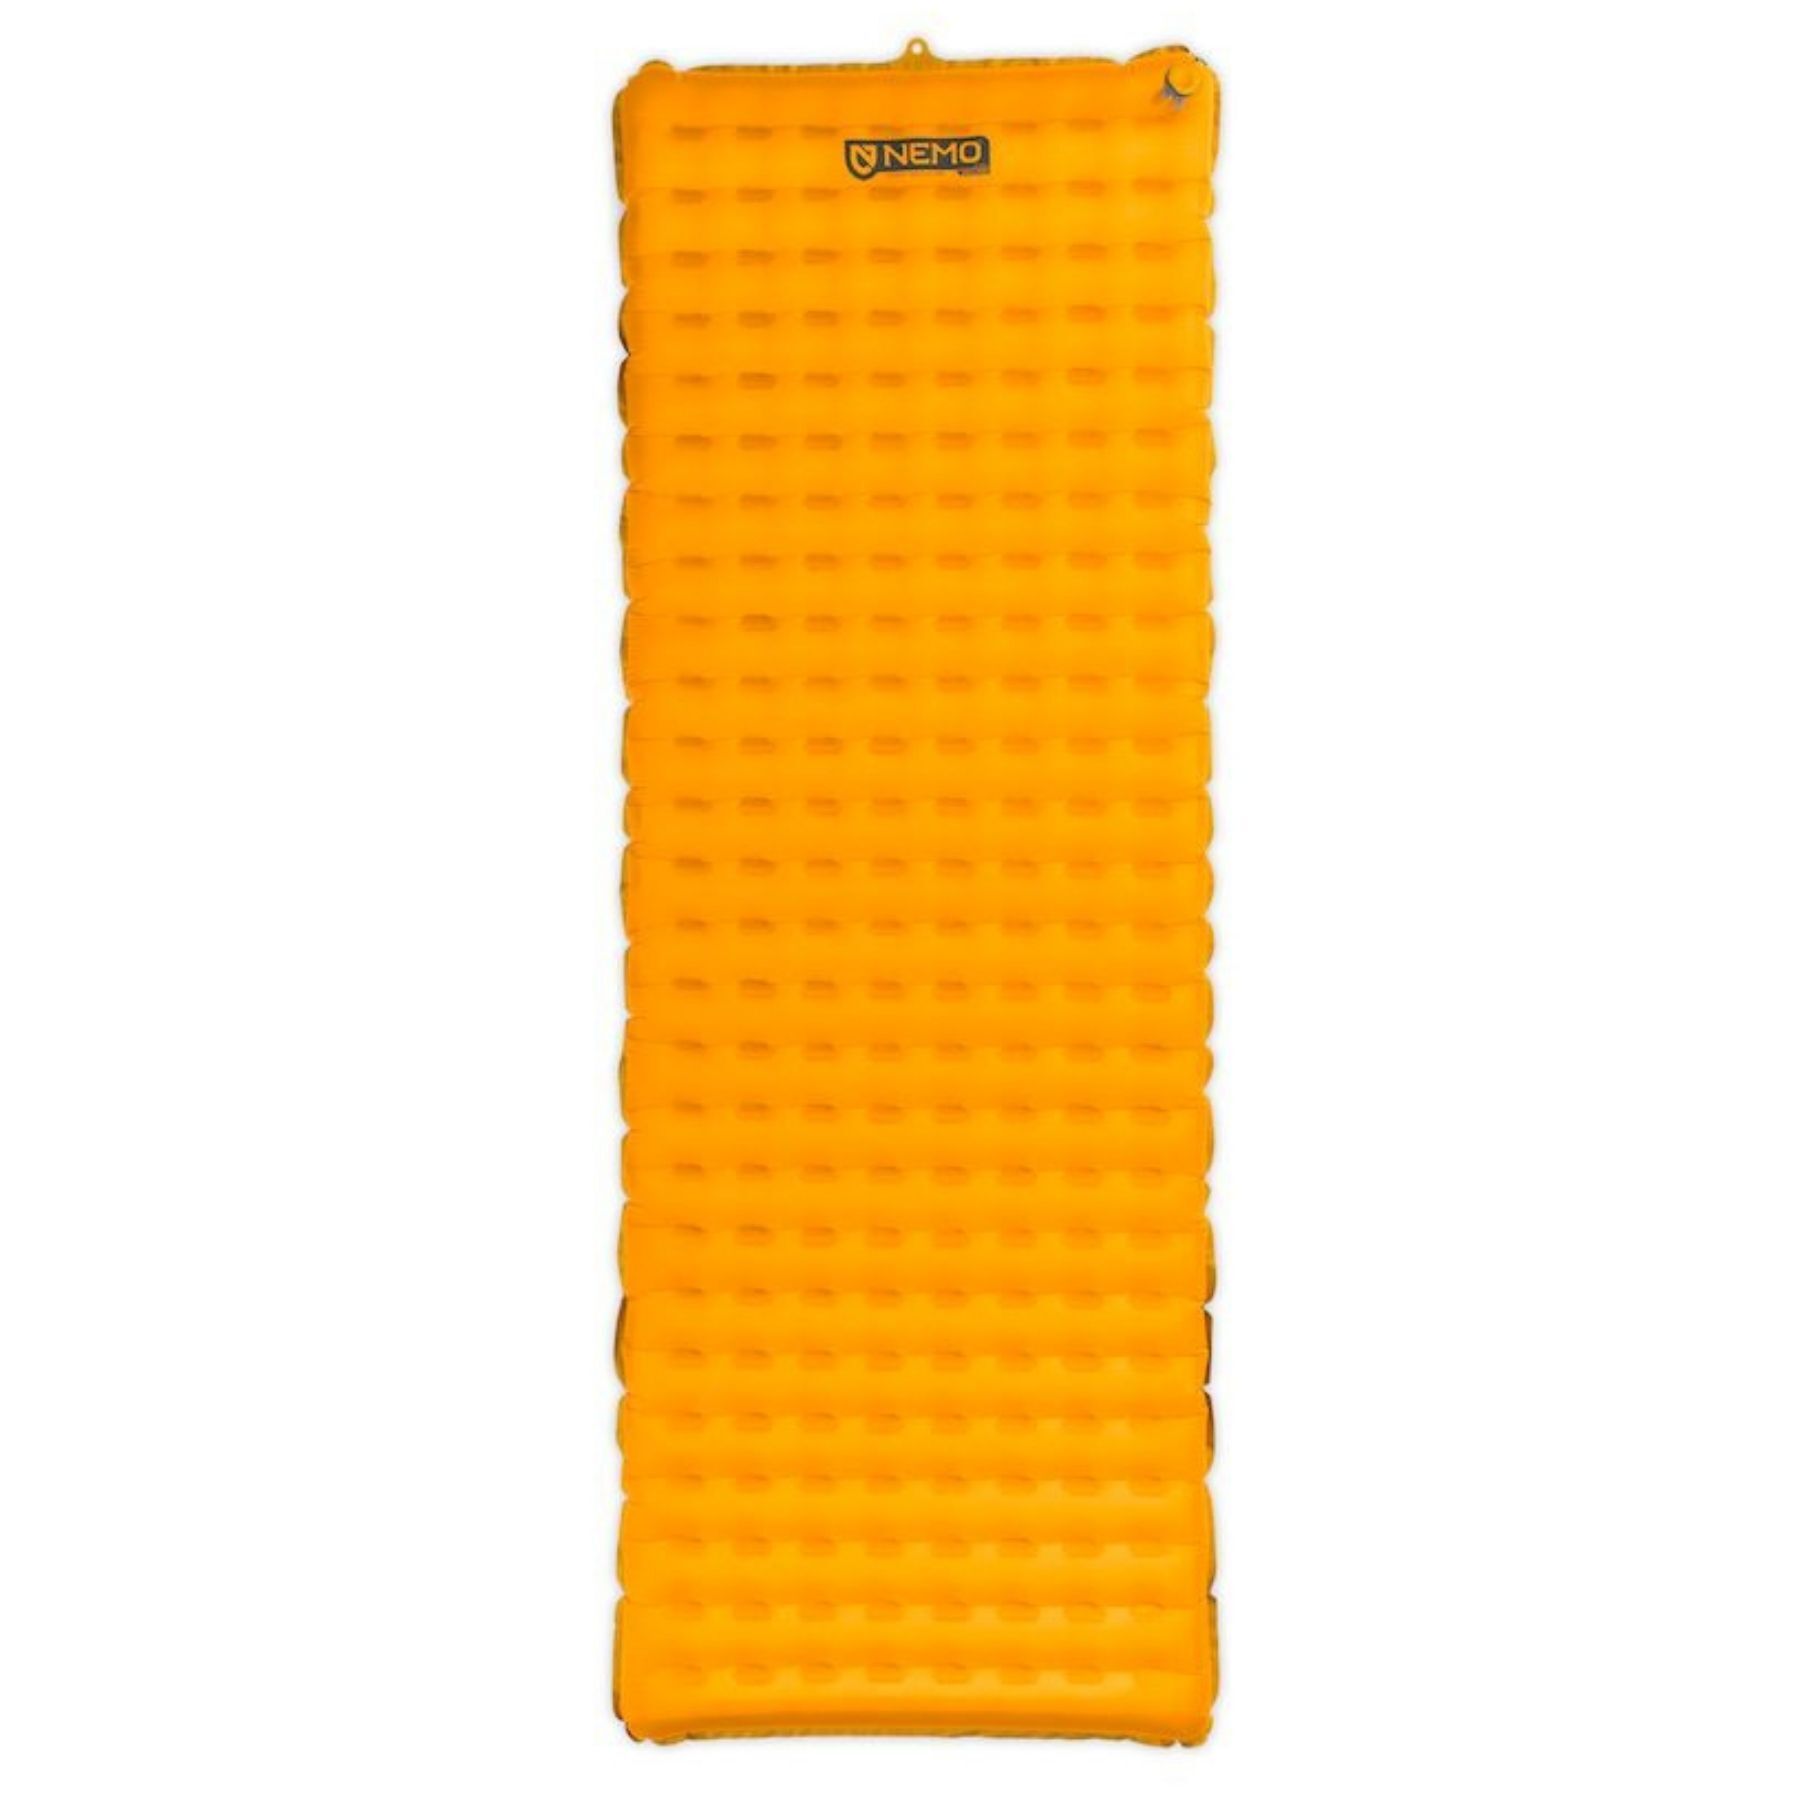 Nemo Tensor Insulated - Sleeping pad